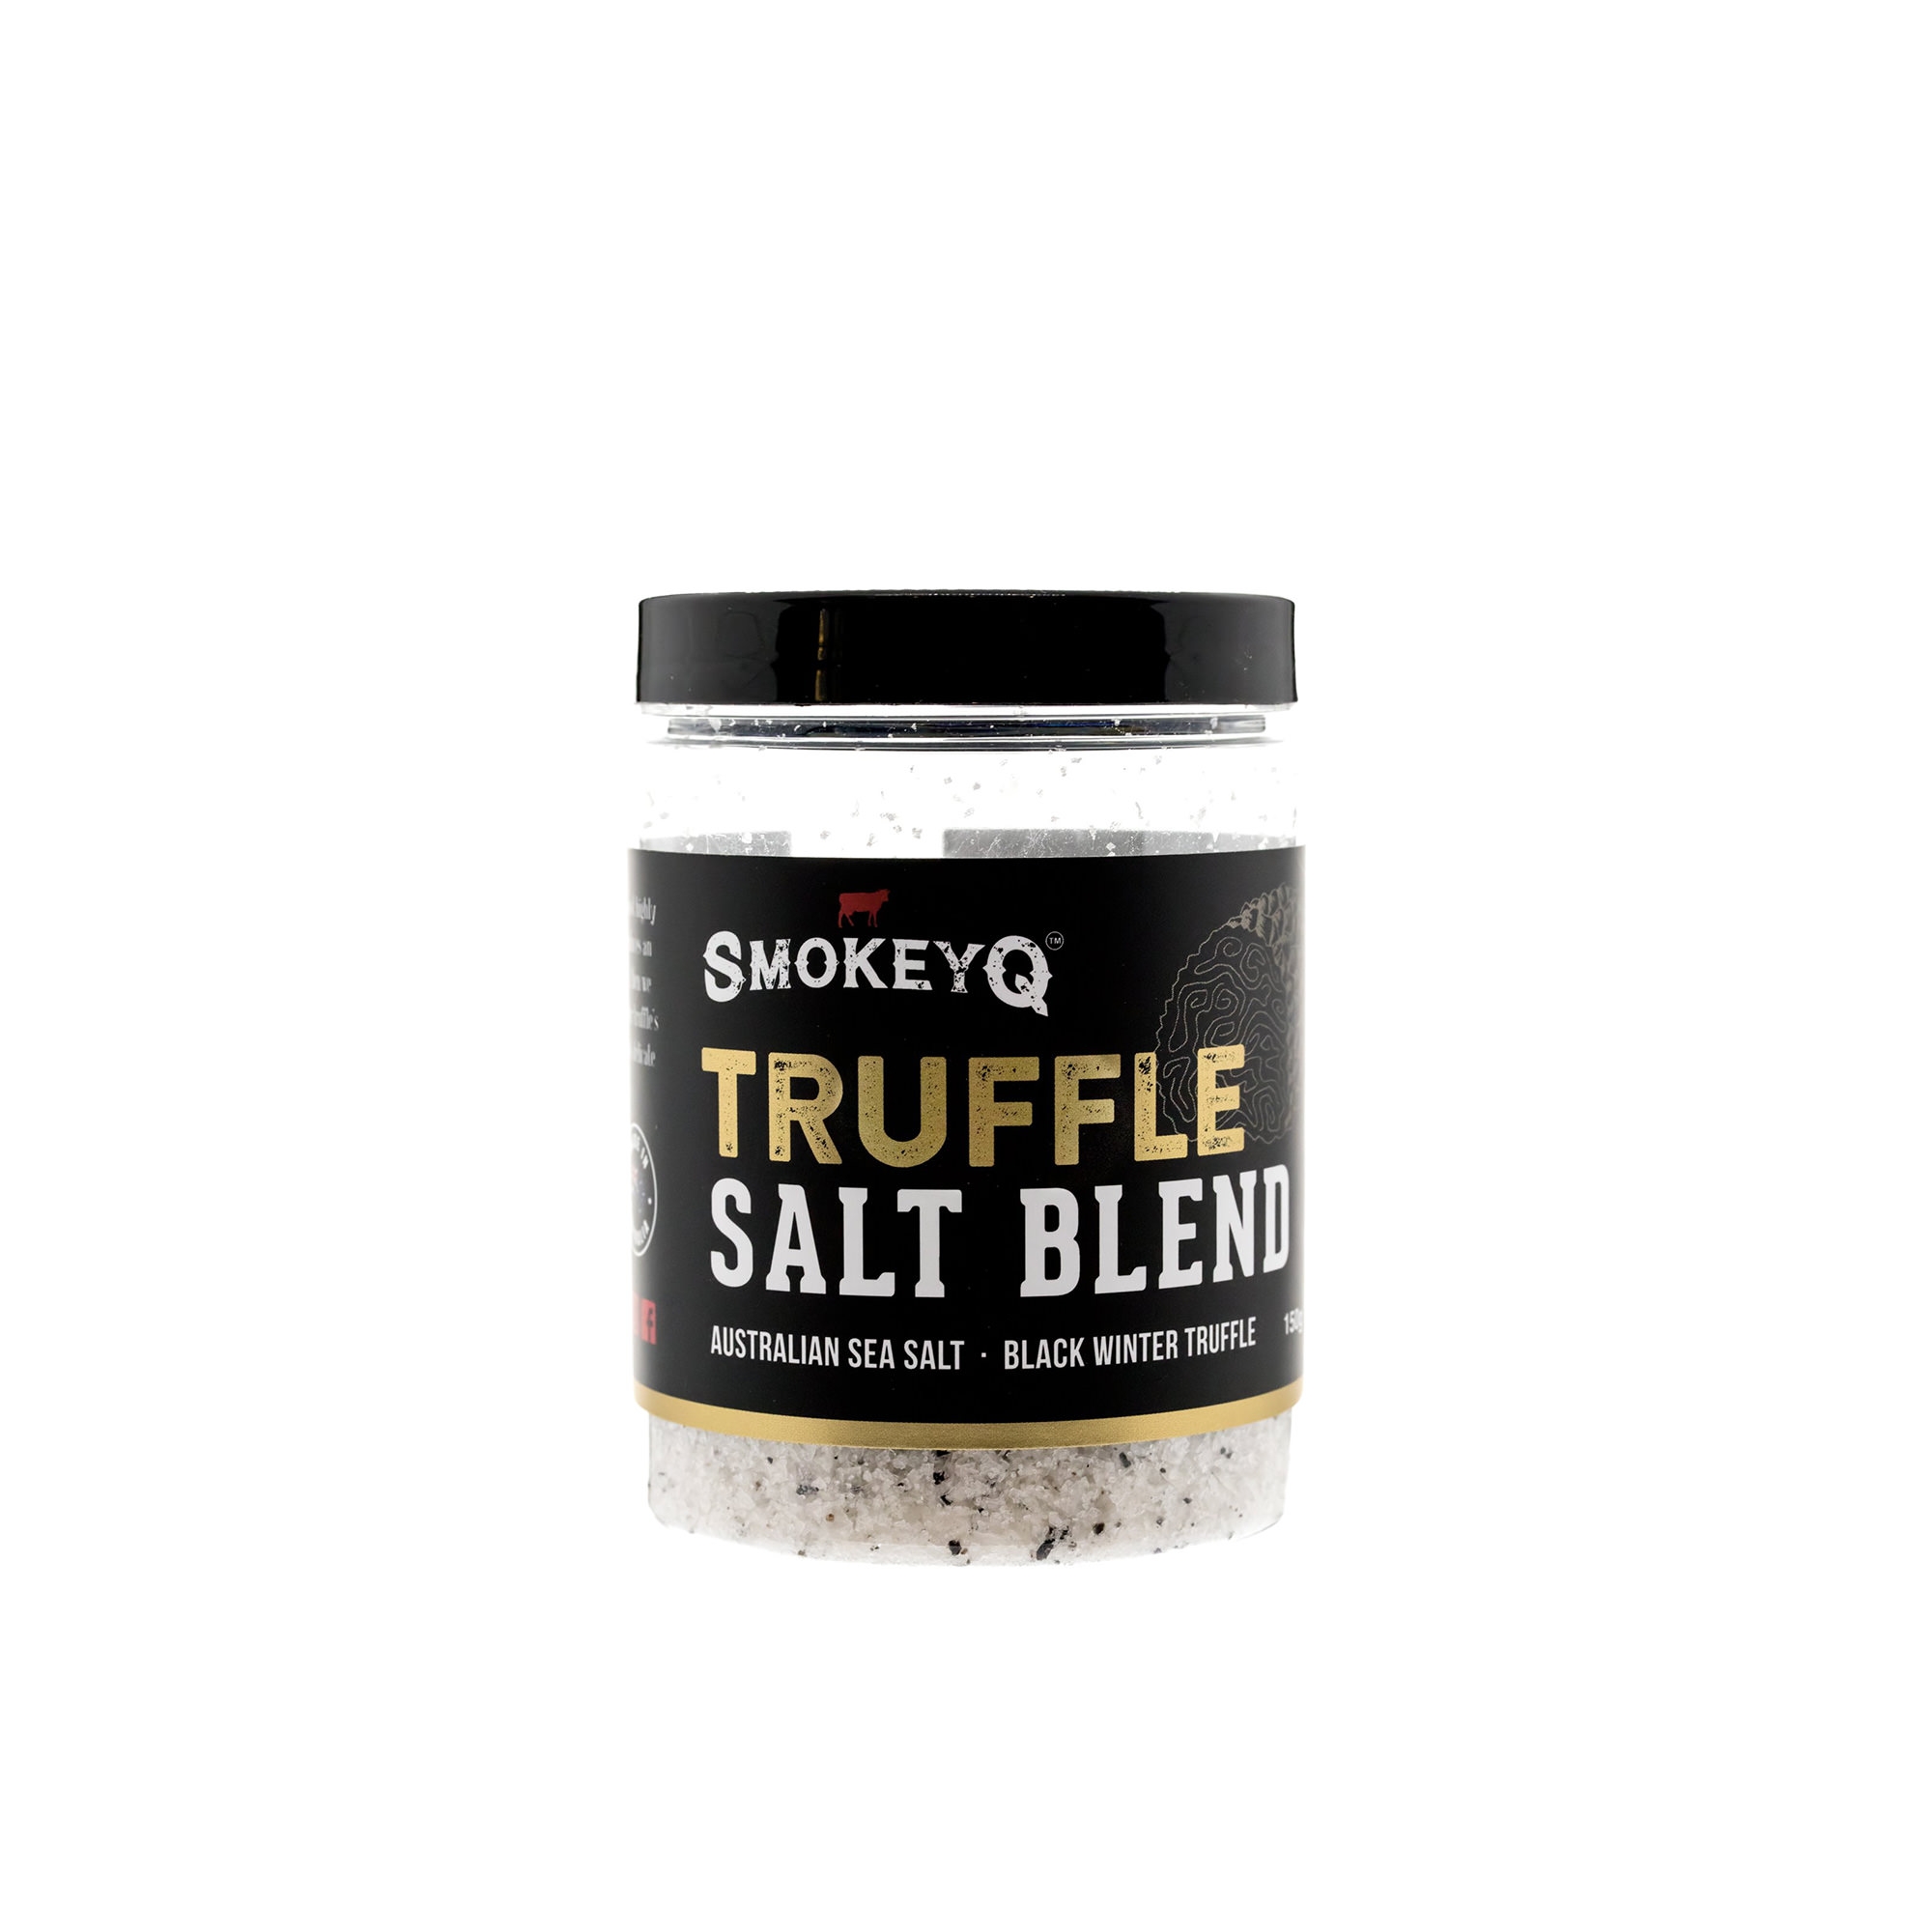 Smokey Q Truffle Salt Blend 150g Image 1